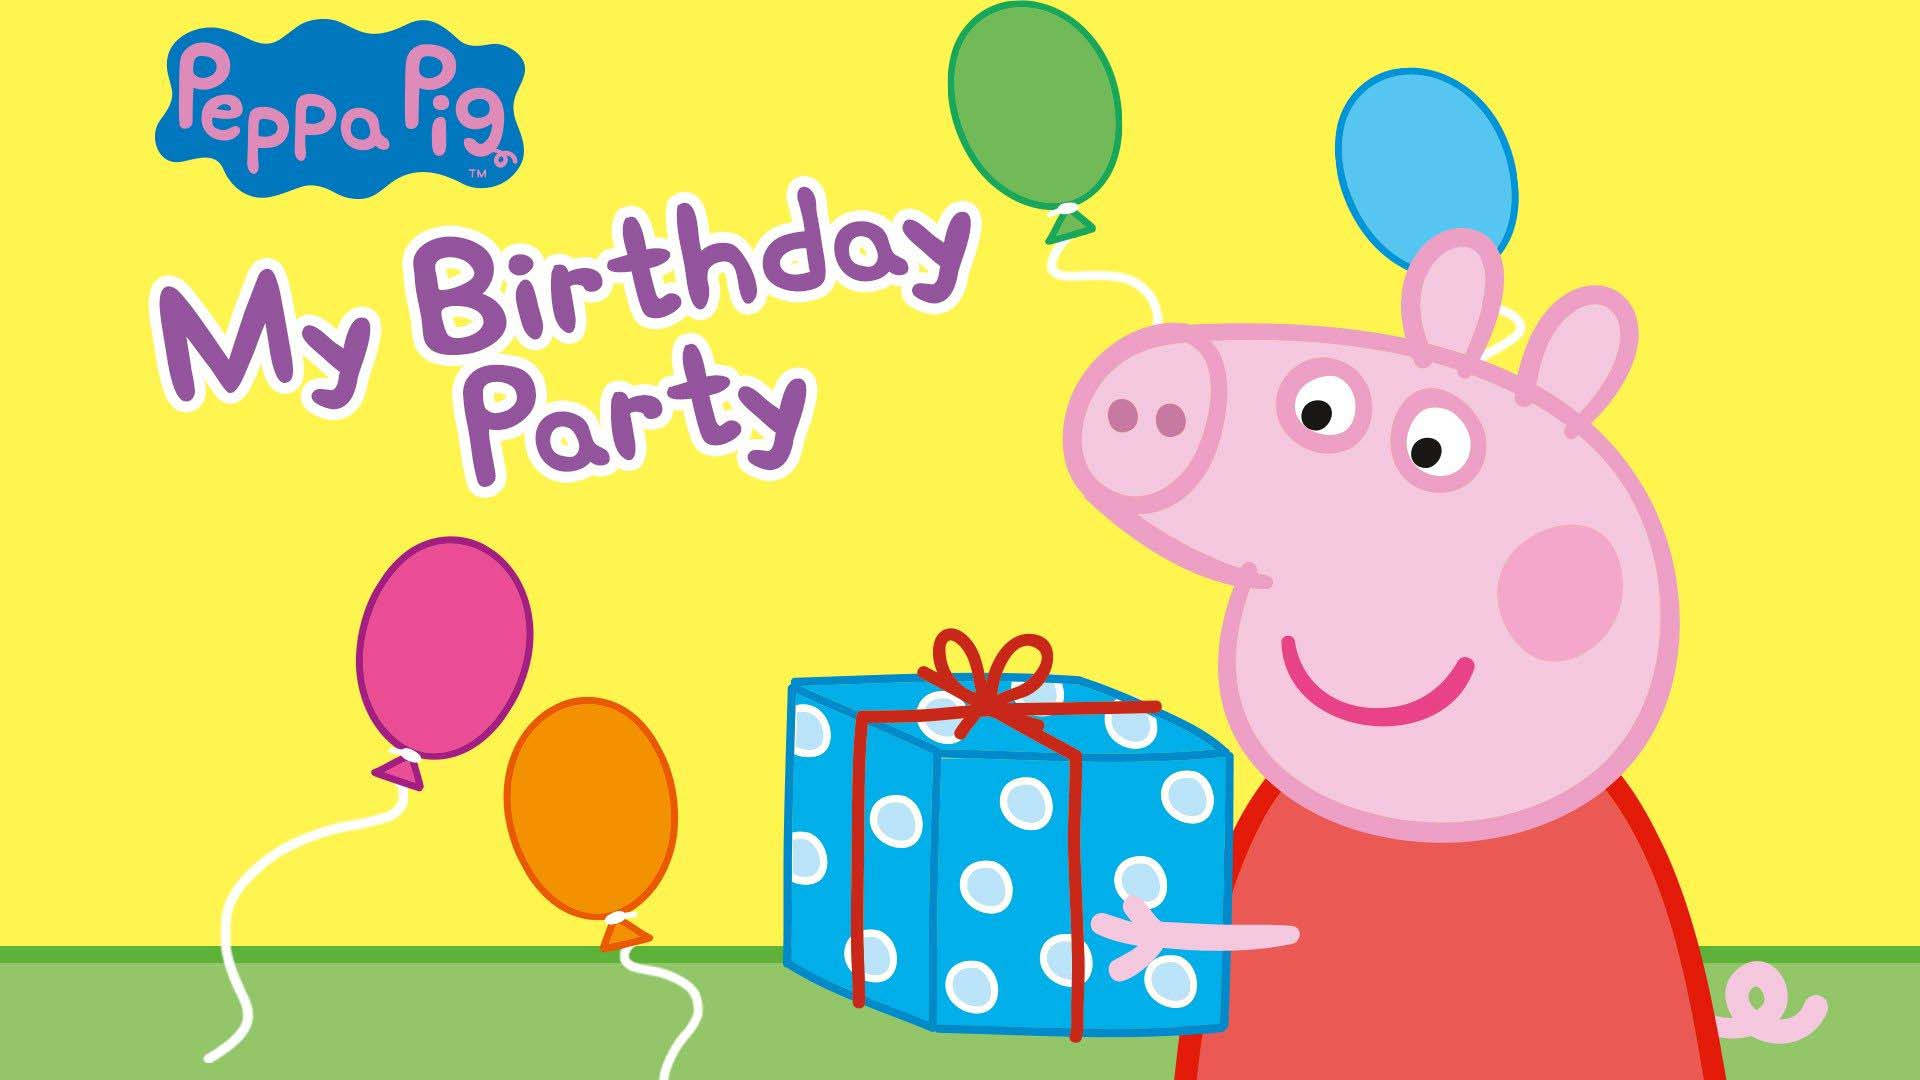 Happy Birthday Peppa Pig wallpaper.